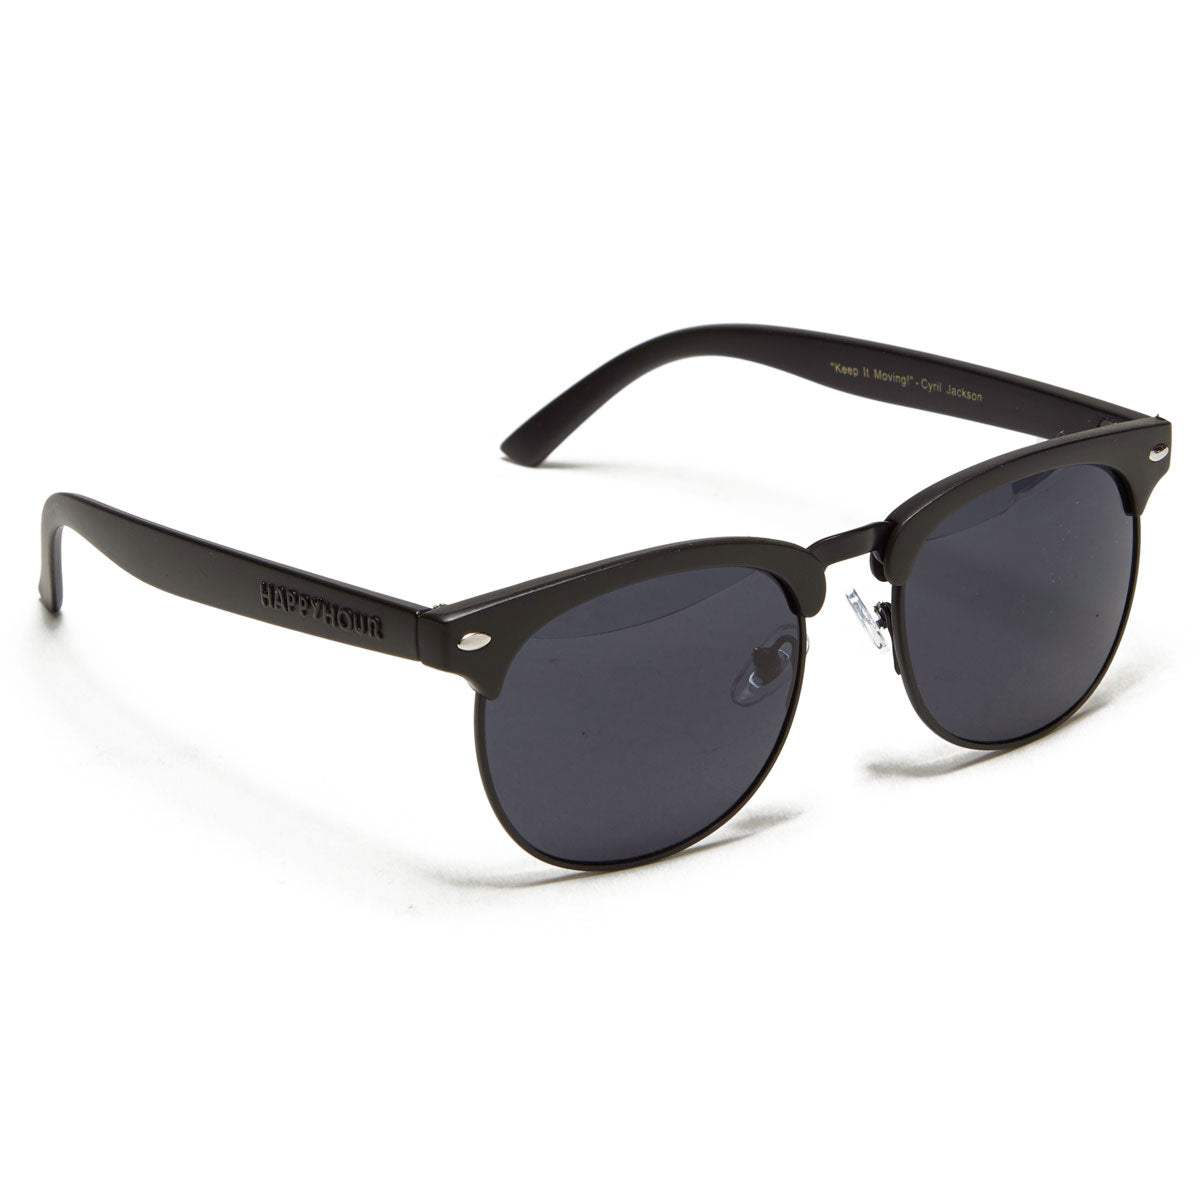 Happy Hour G2 Sunglasses - CJ/Black image 1